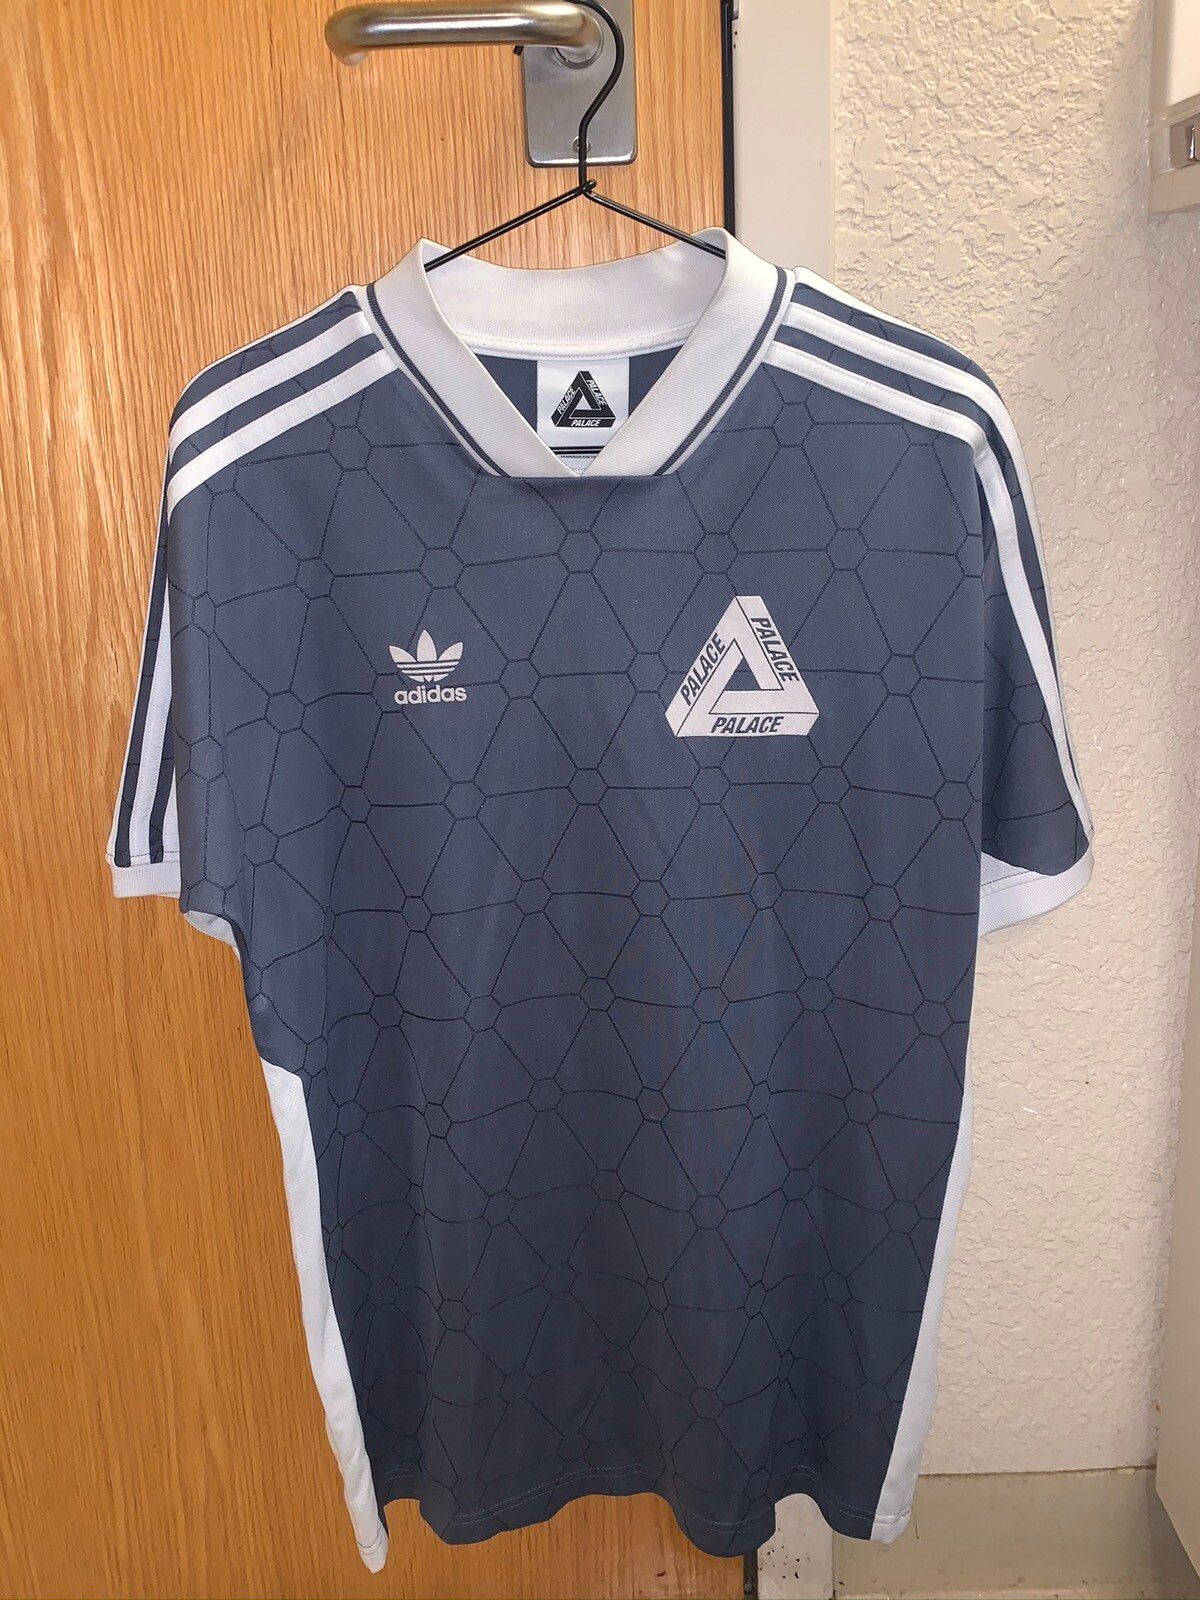 Adidas Palace x Adidas Team Soccer Jersey Shirt Onix SS15 Size US S / EU 44-46 / 1 - 1 Preview